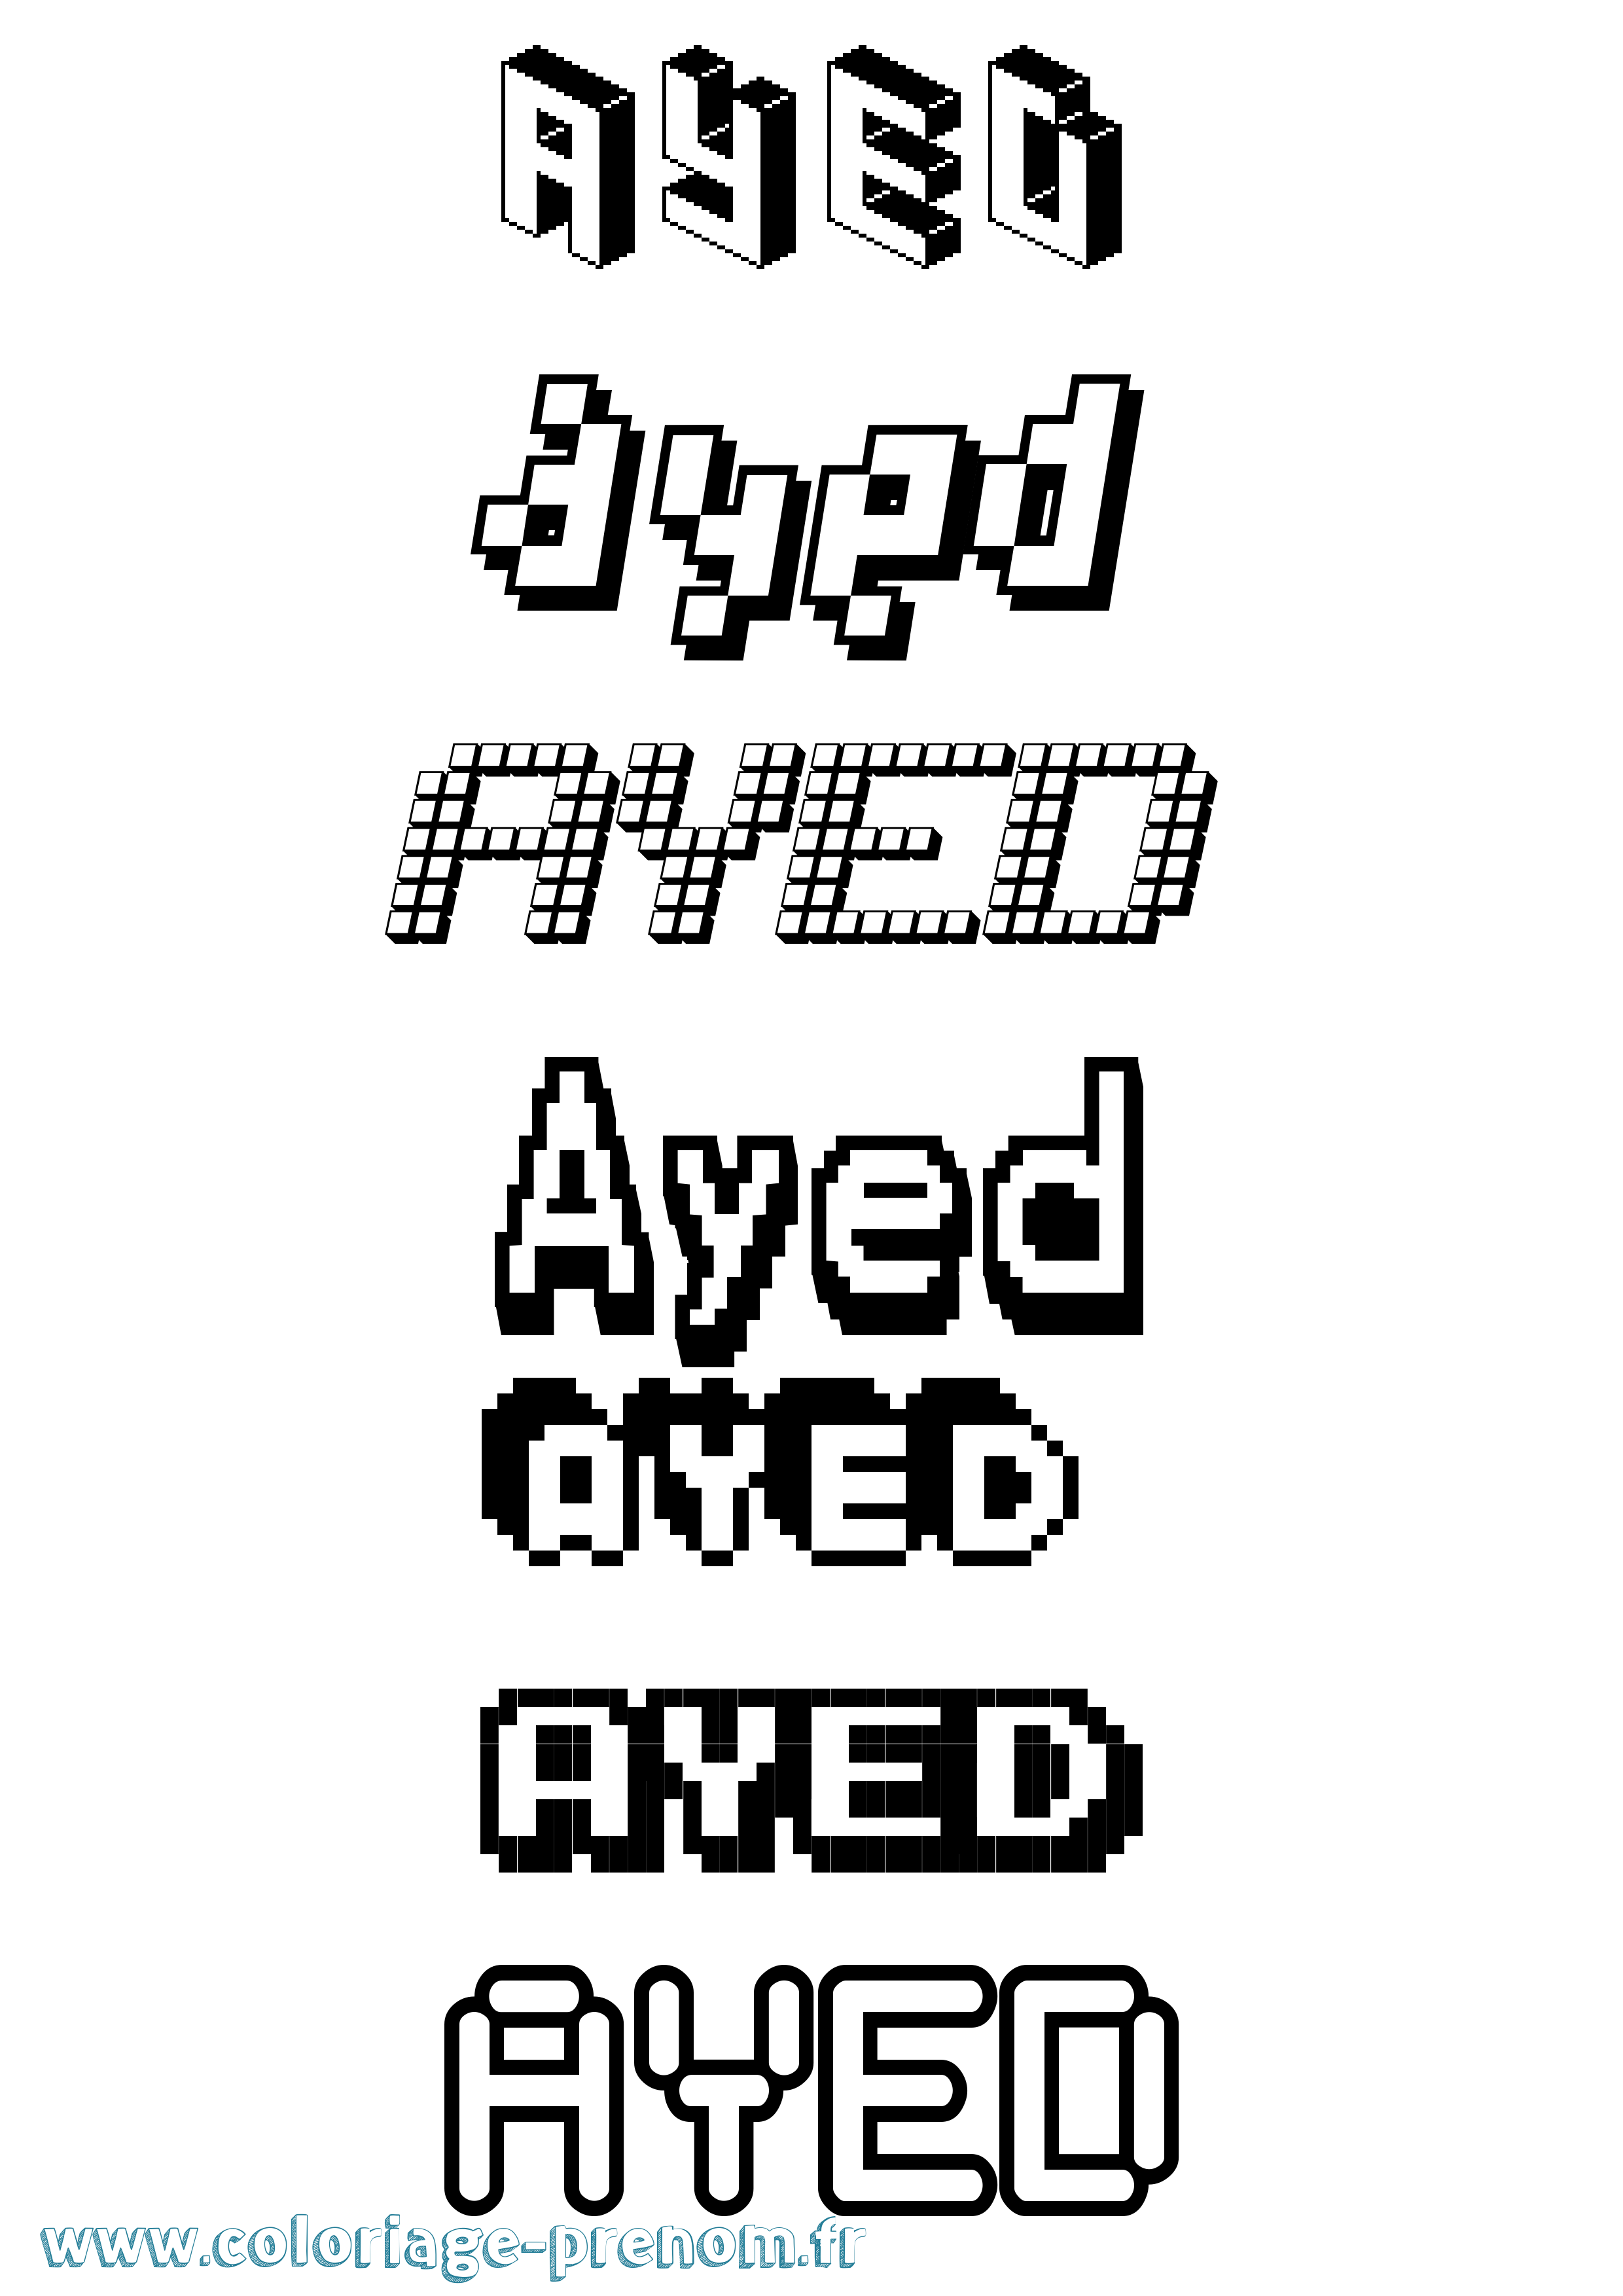 Coloriage prénom Ayed Pixel